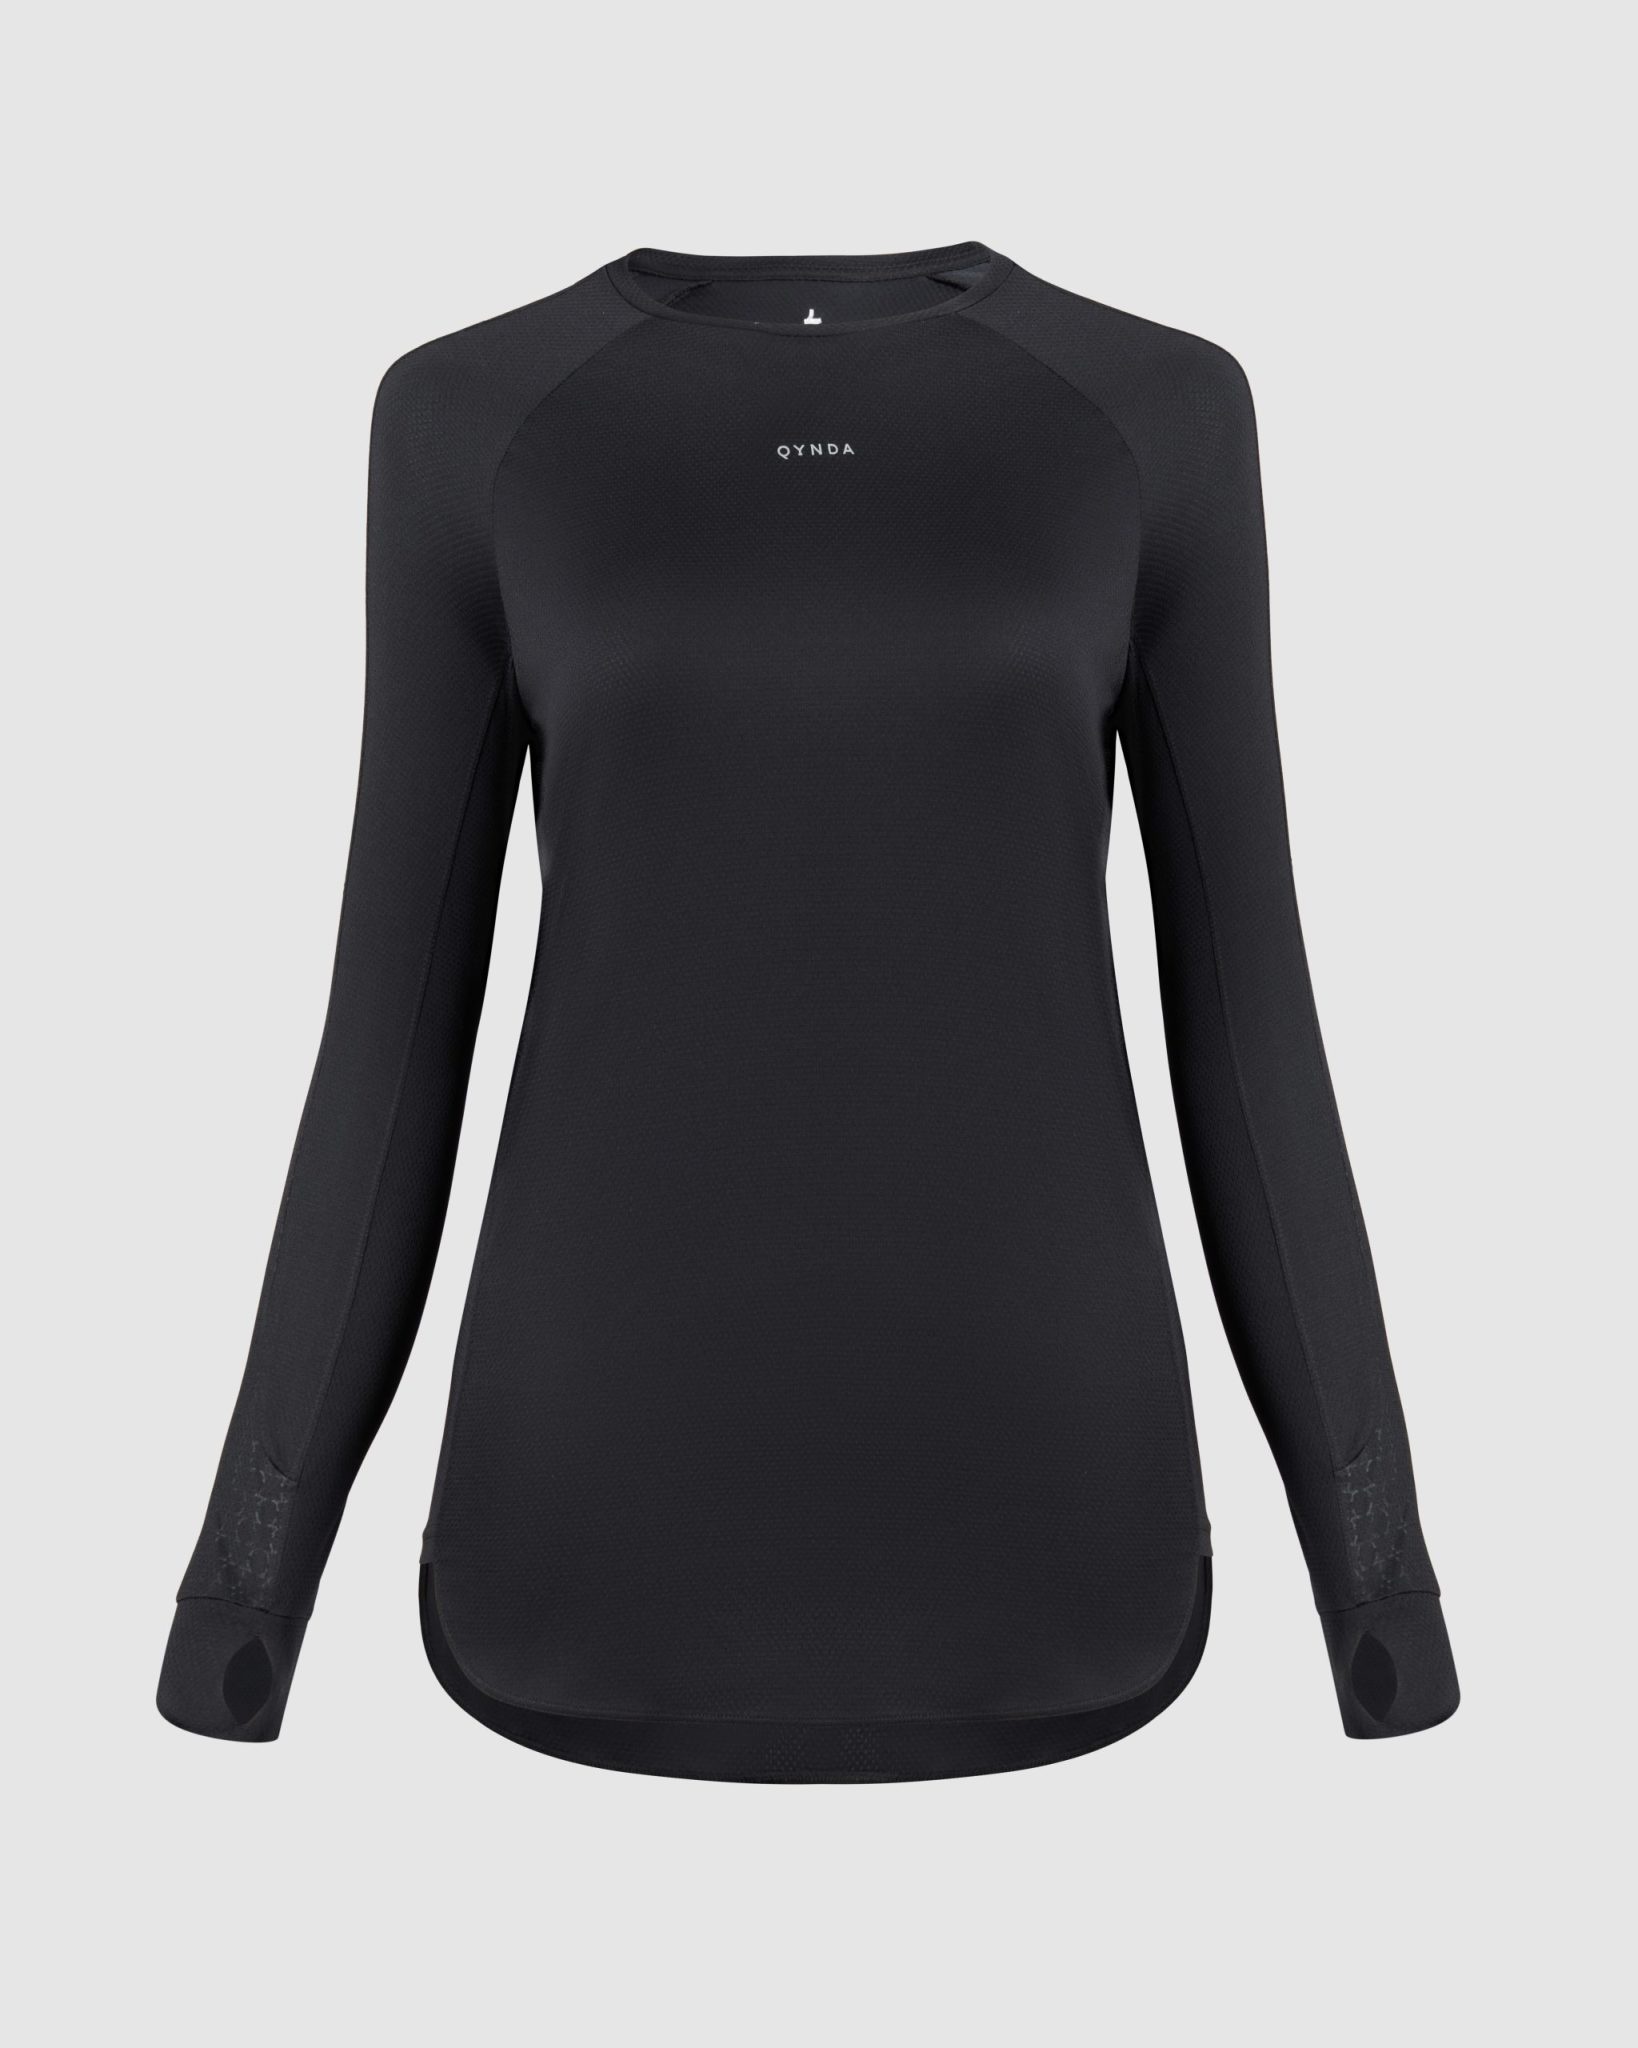 Hoplynn Womens Black Athletic Long Sleeve Shirt Size Large - beyond exchange